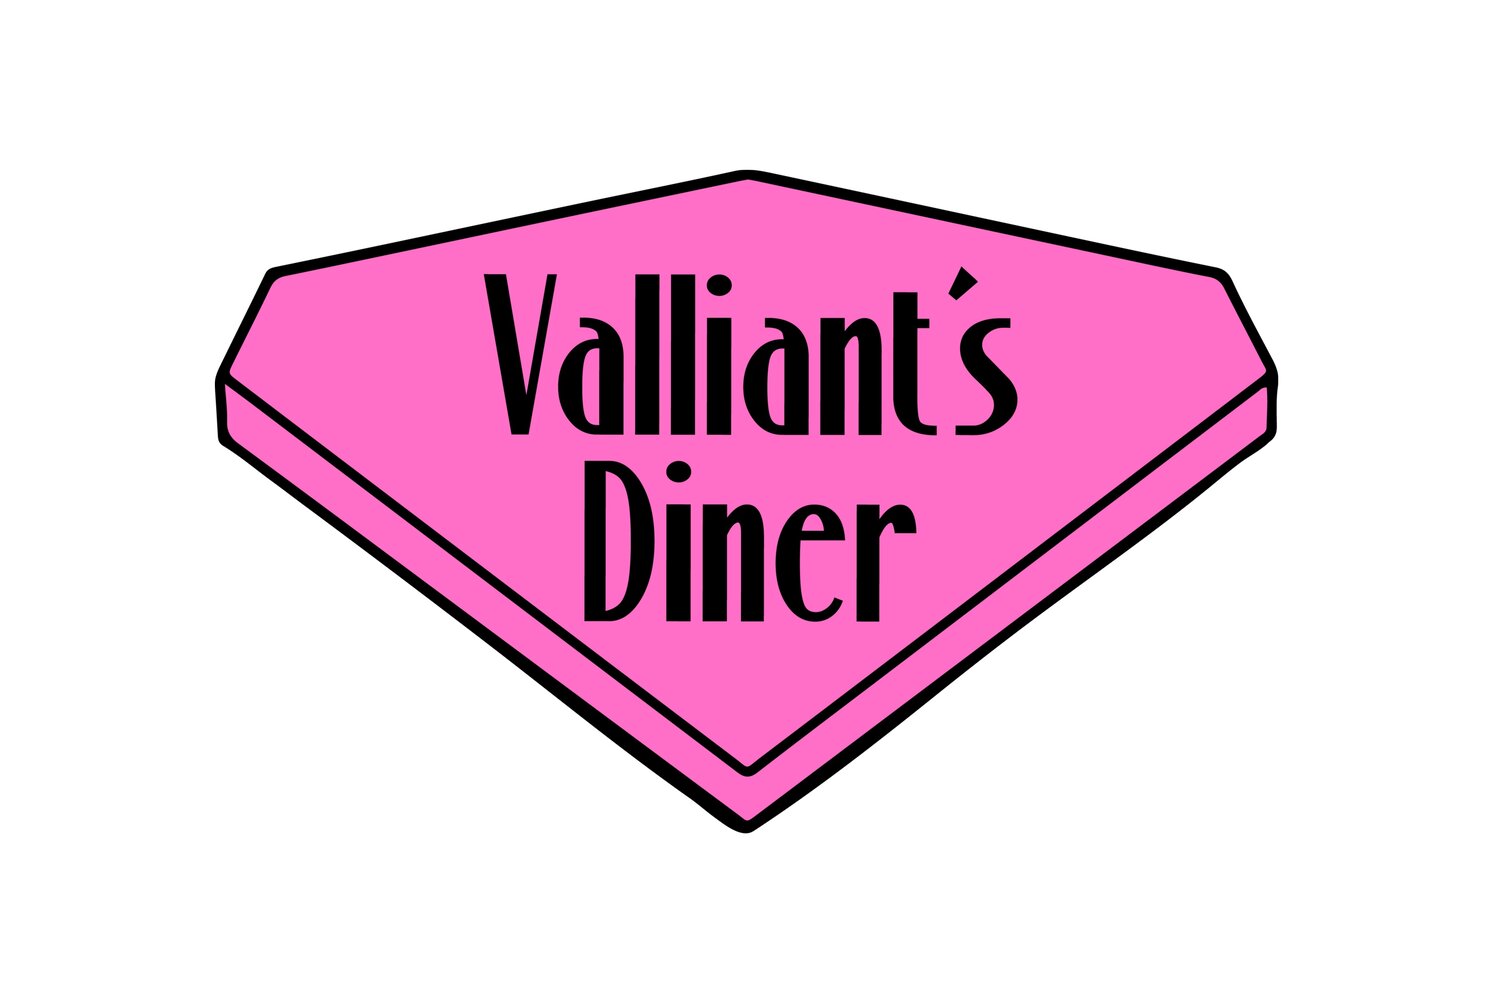 Valliant's Diner